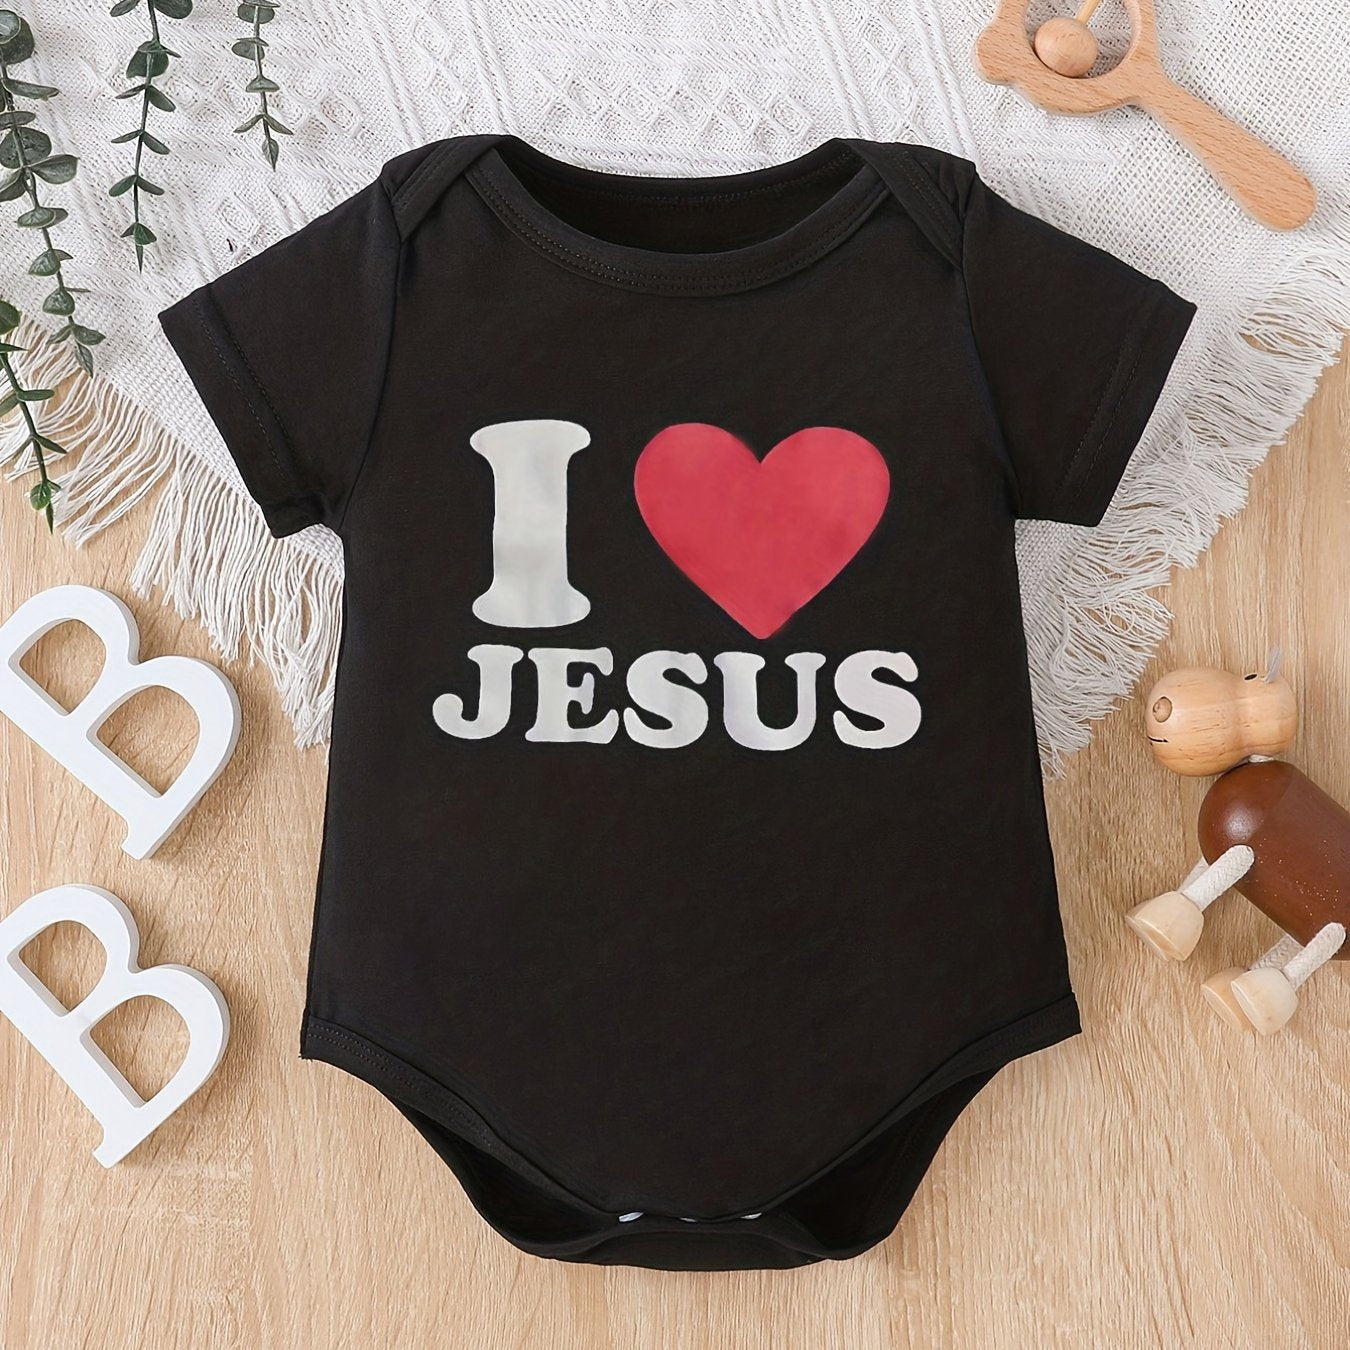 I LOVE JESUS Christian Baby Onesie claimedbygoddesigns